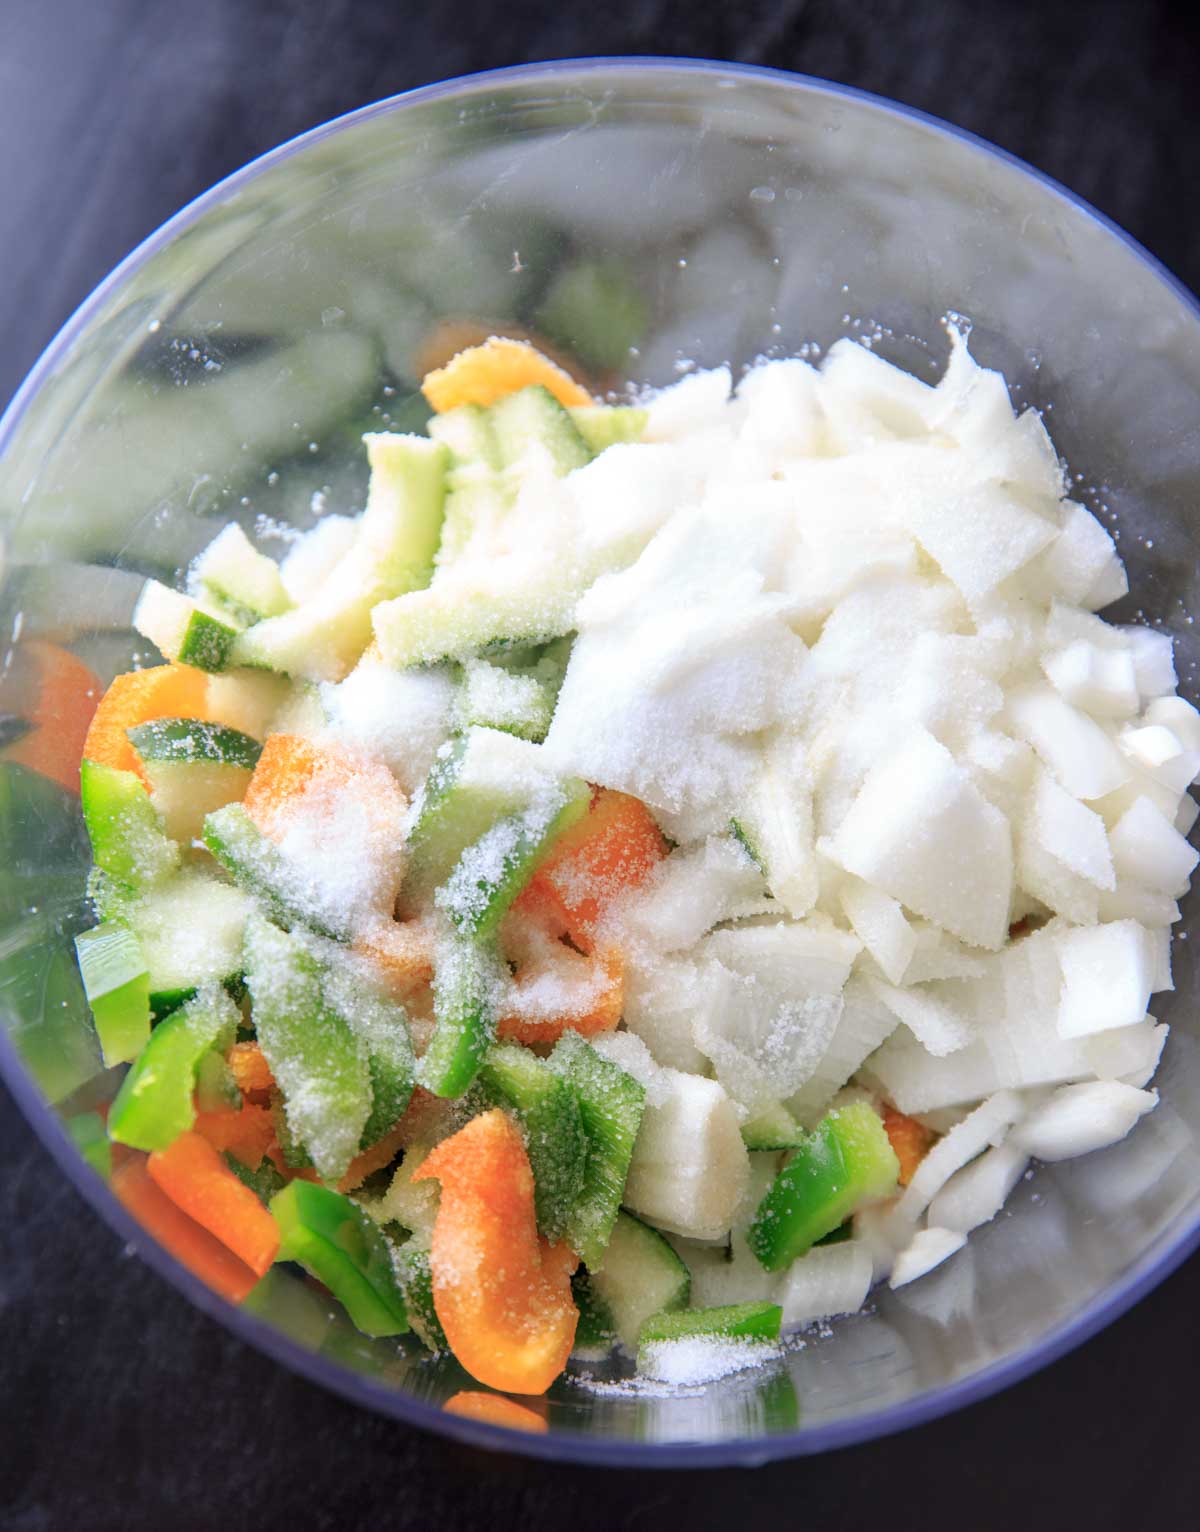 Homemade Sweet Pickle Relish Recipe - raw veggies with salt